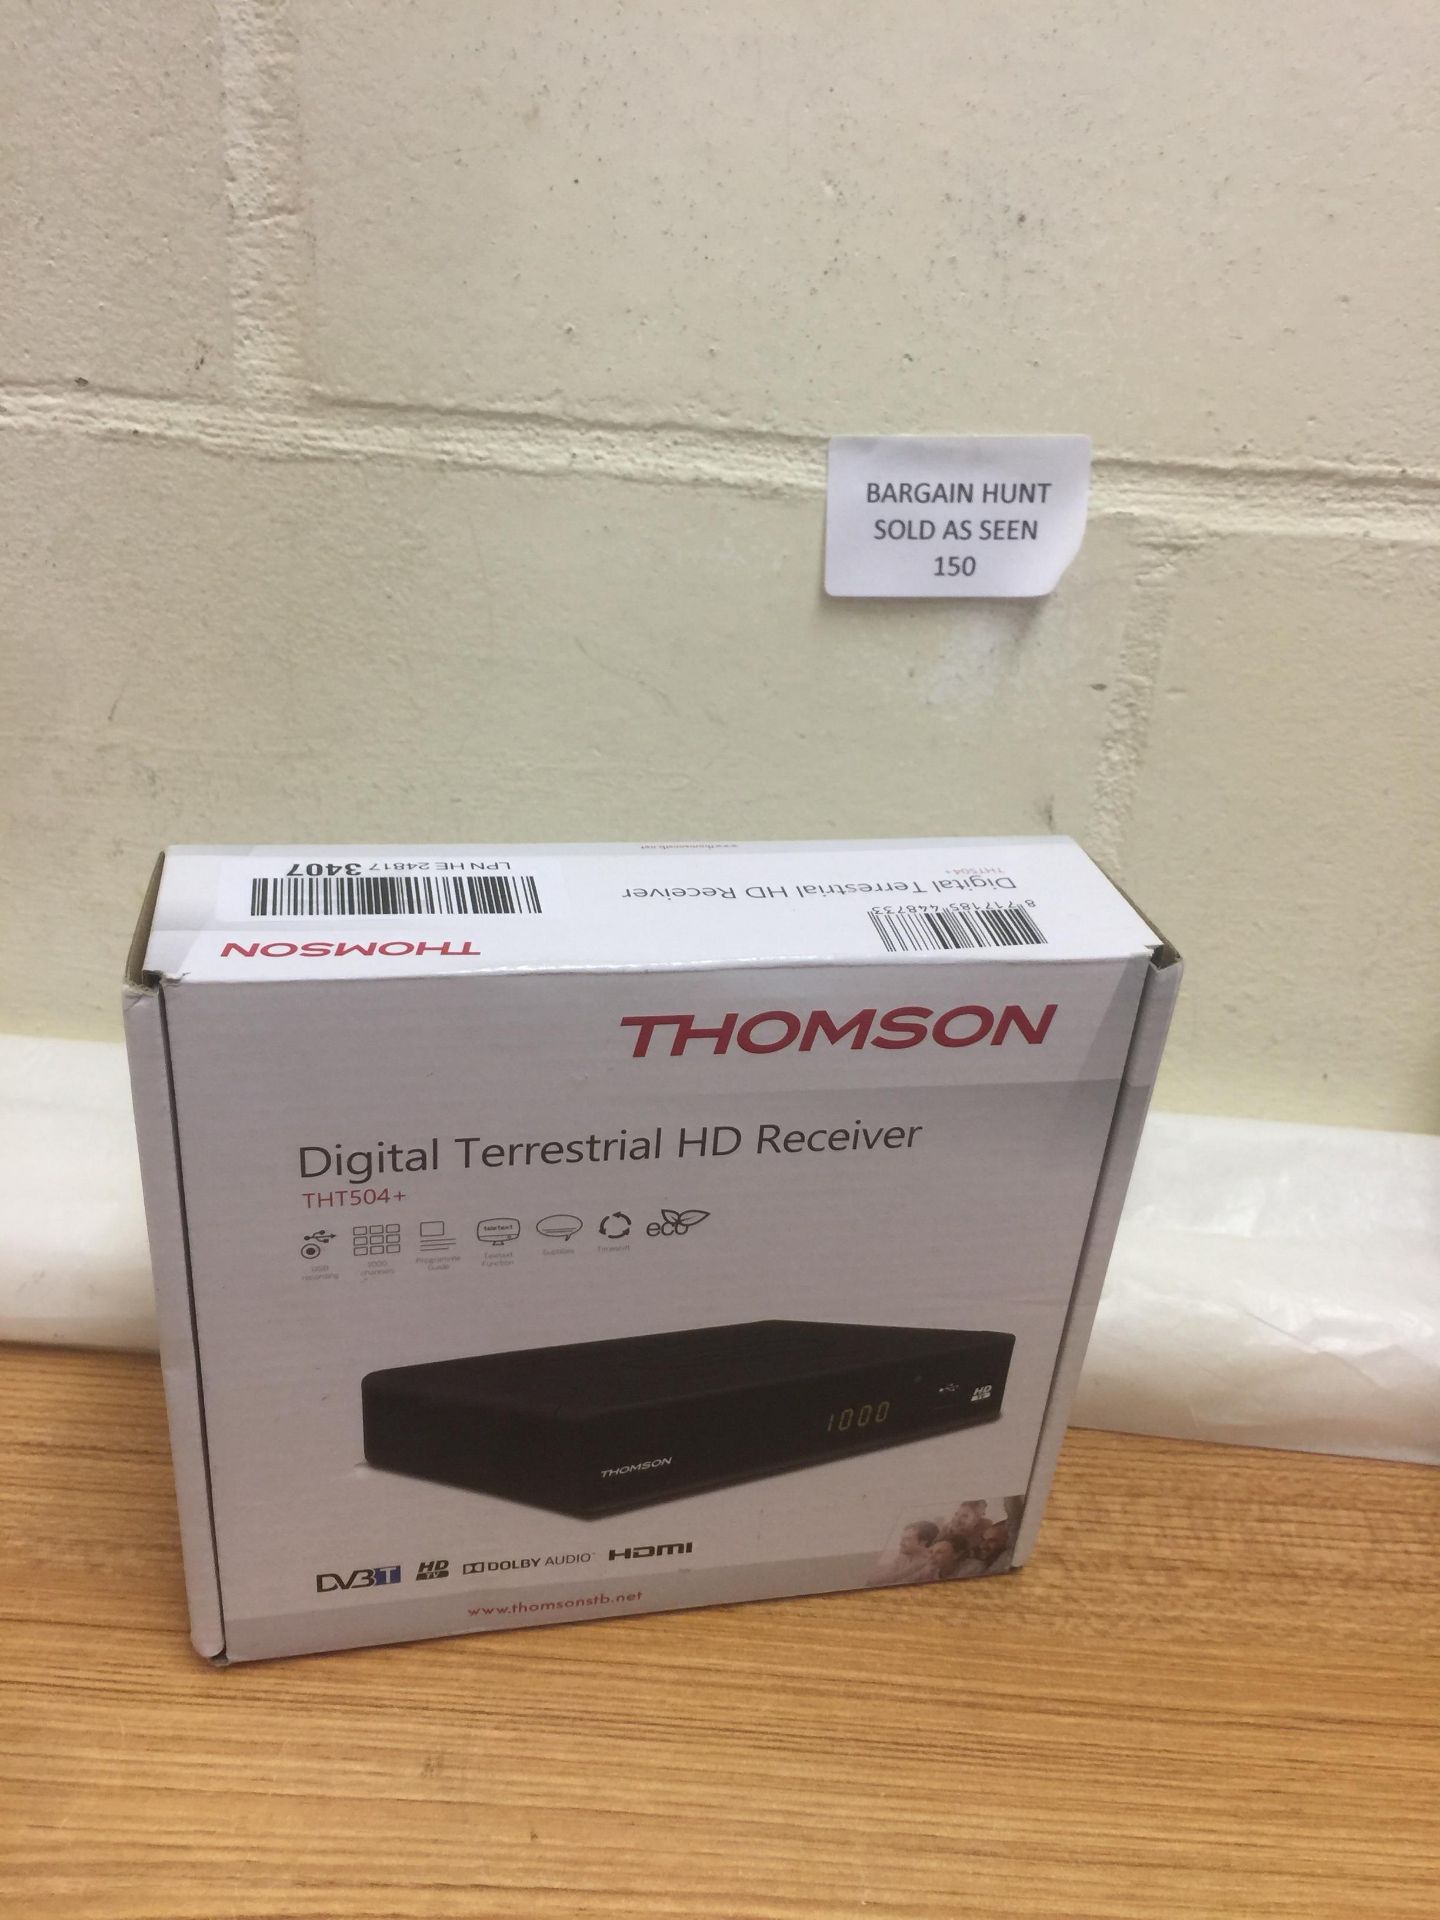 Thomson Terrestrial HD Receiver